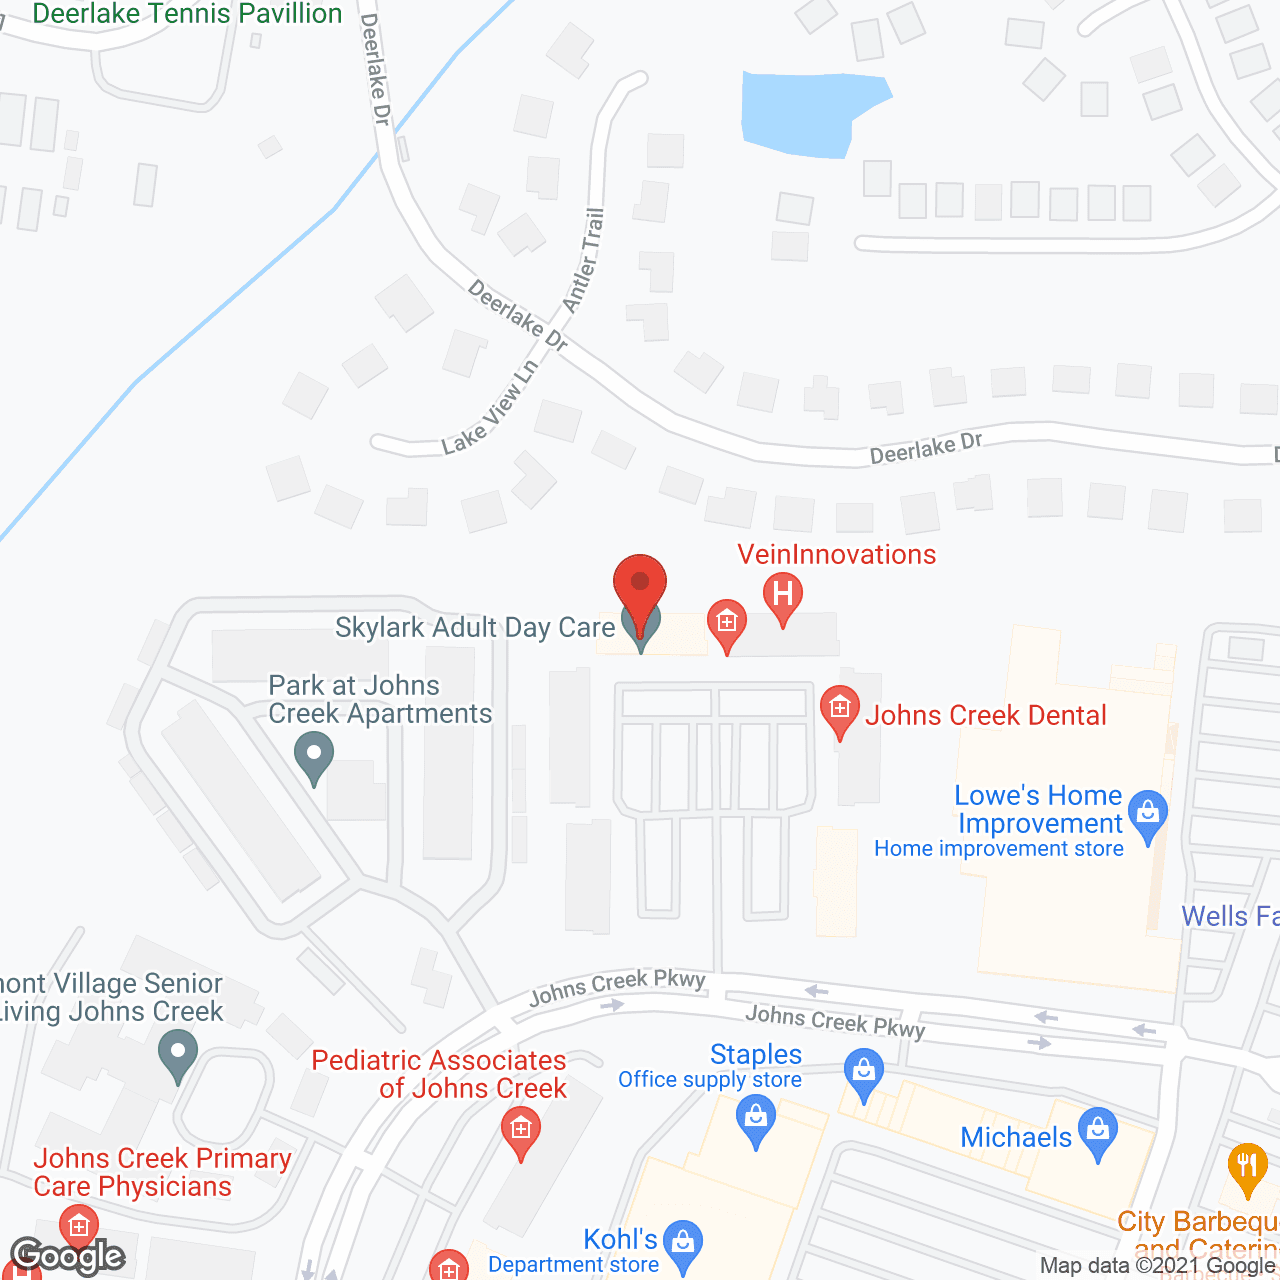 Skylark Adult Day Care of Johns Creek in google map